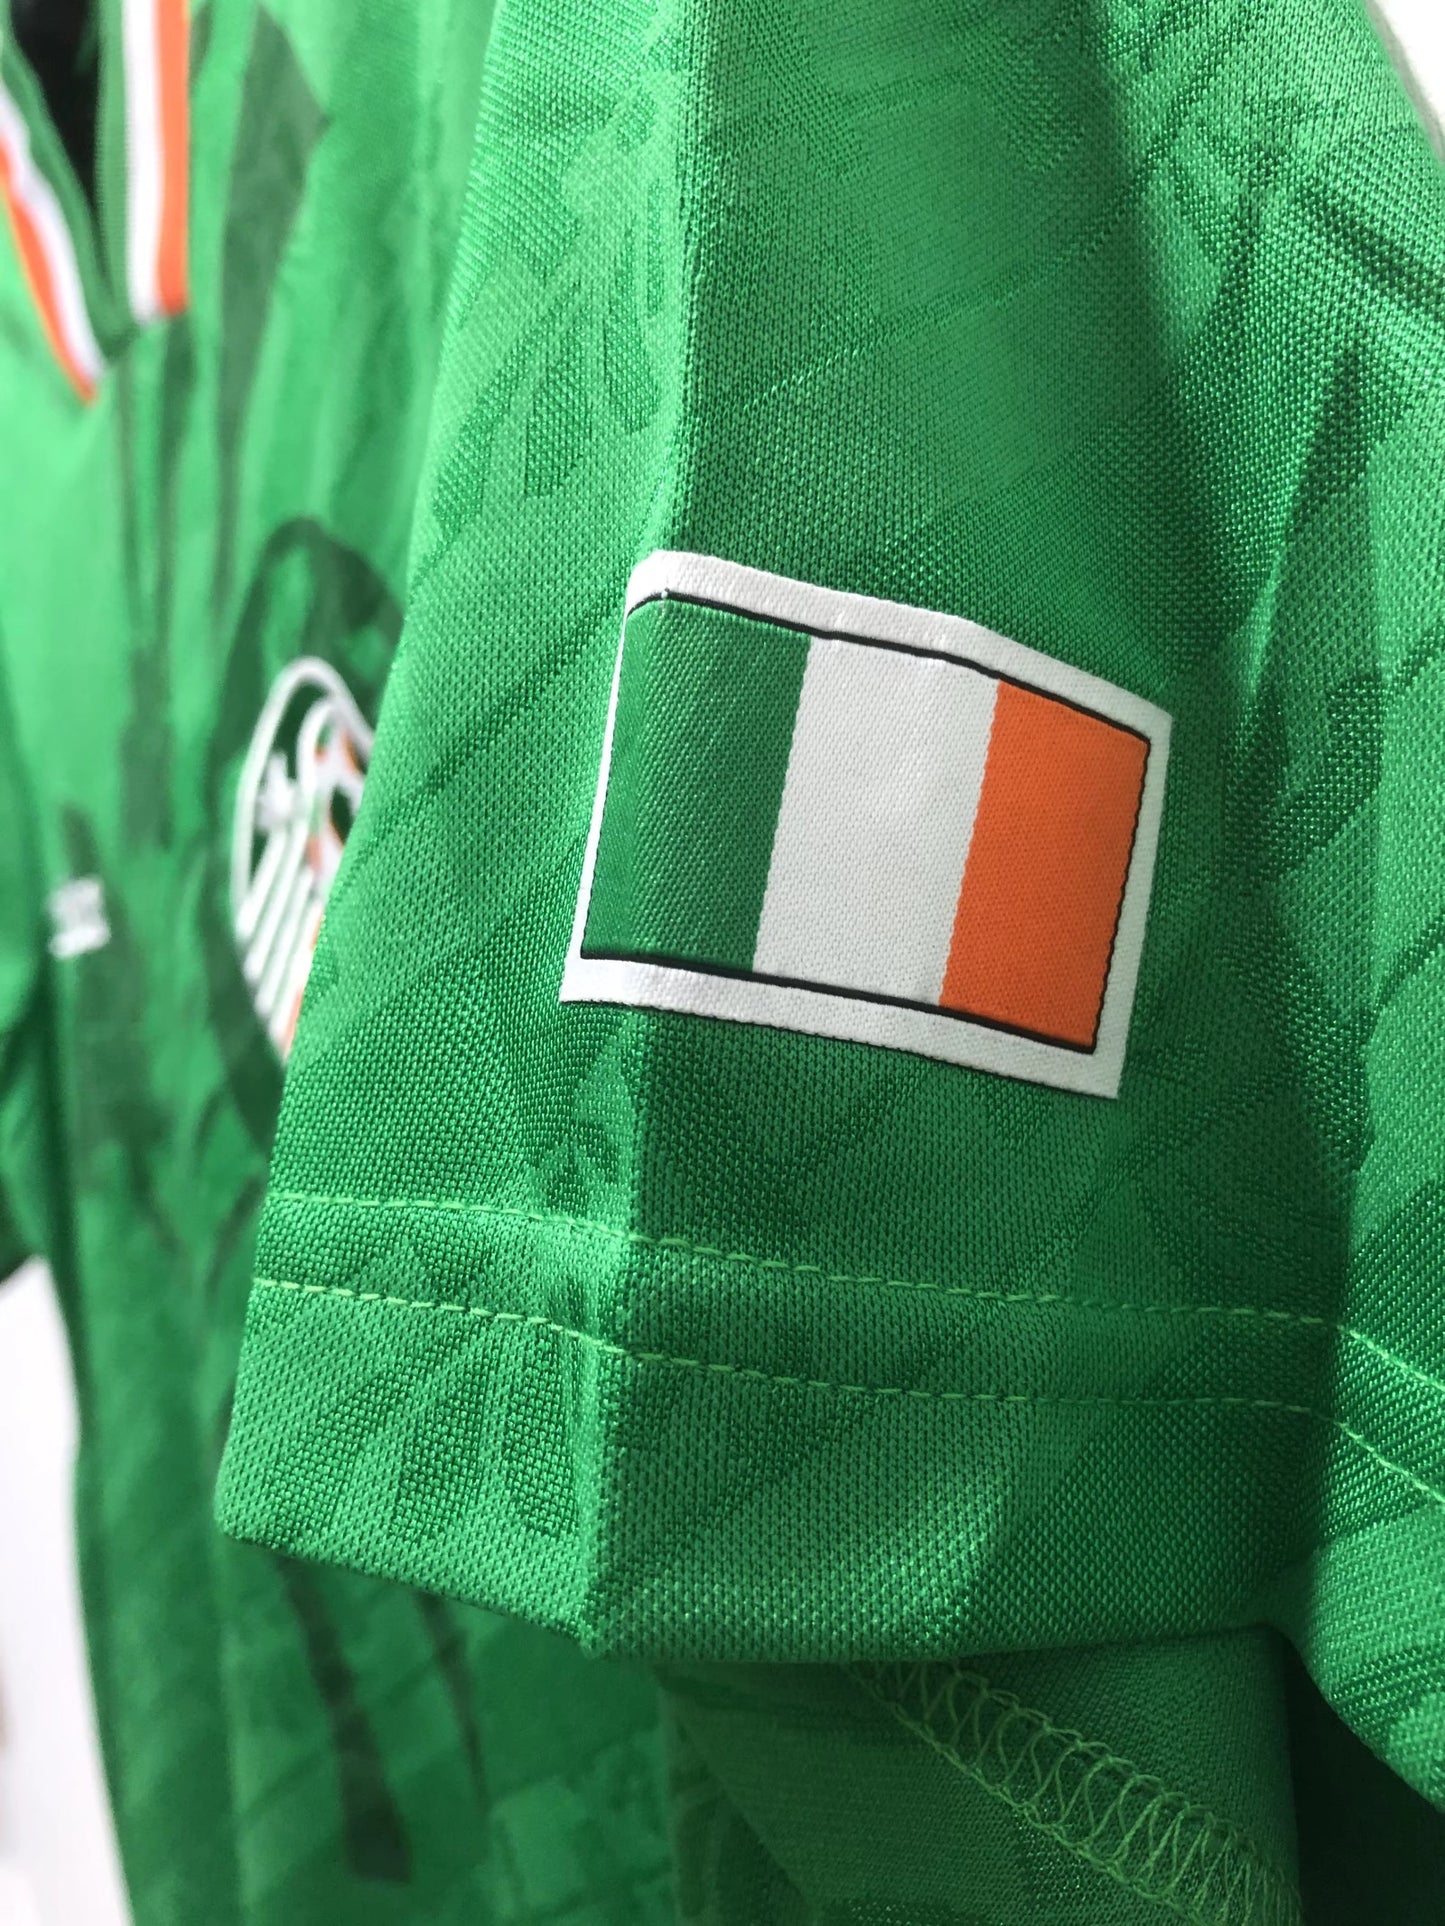 Ireland 1994 Home Shirt